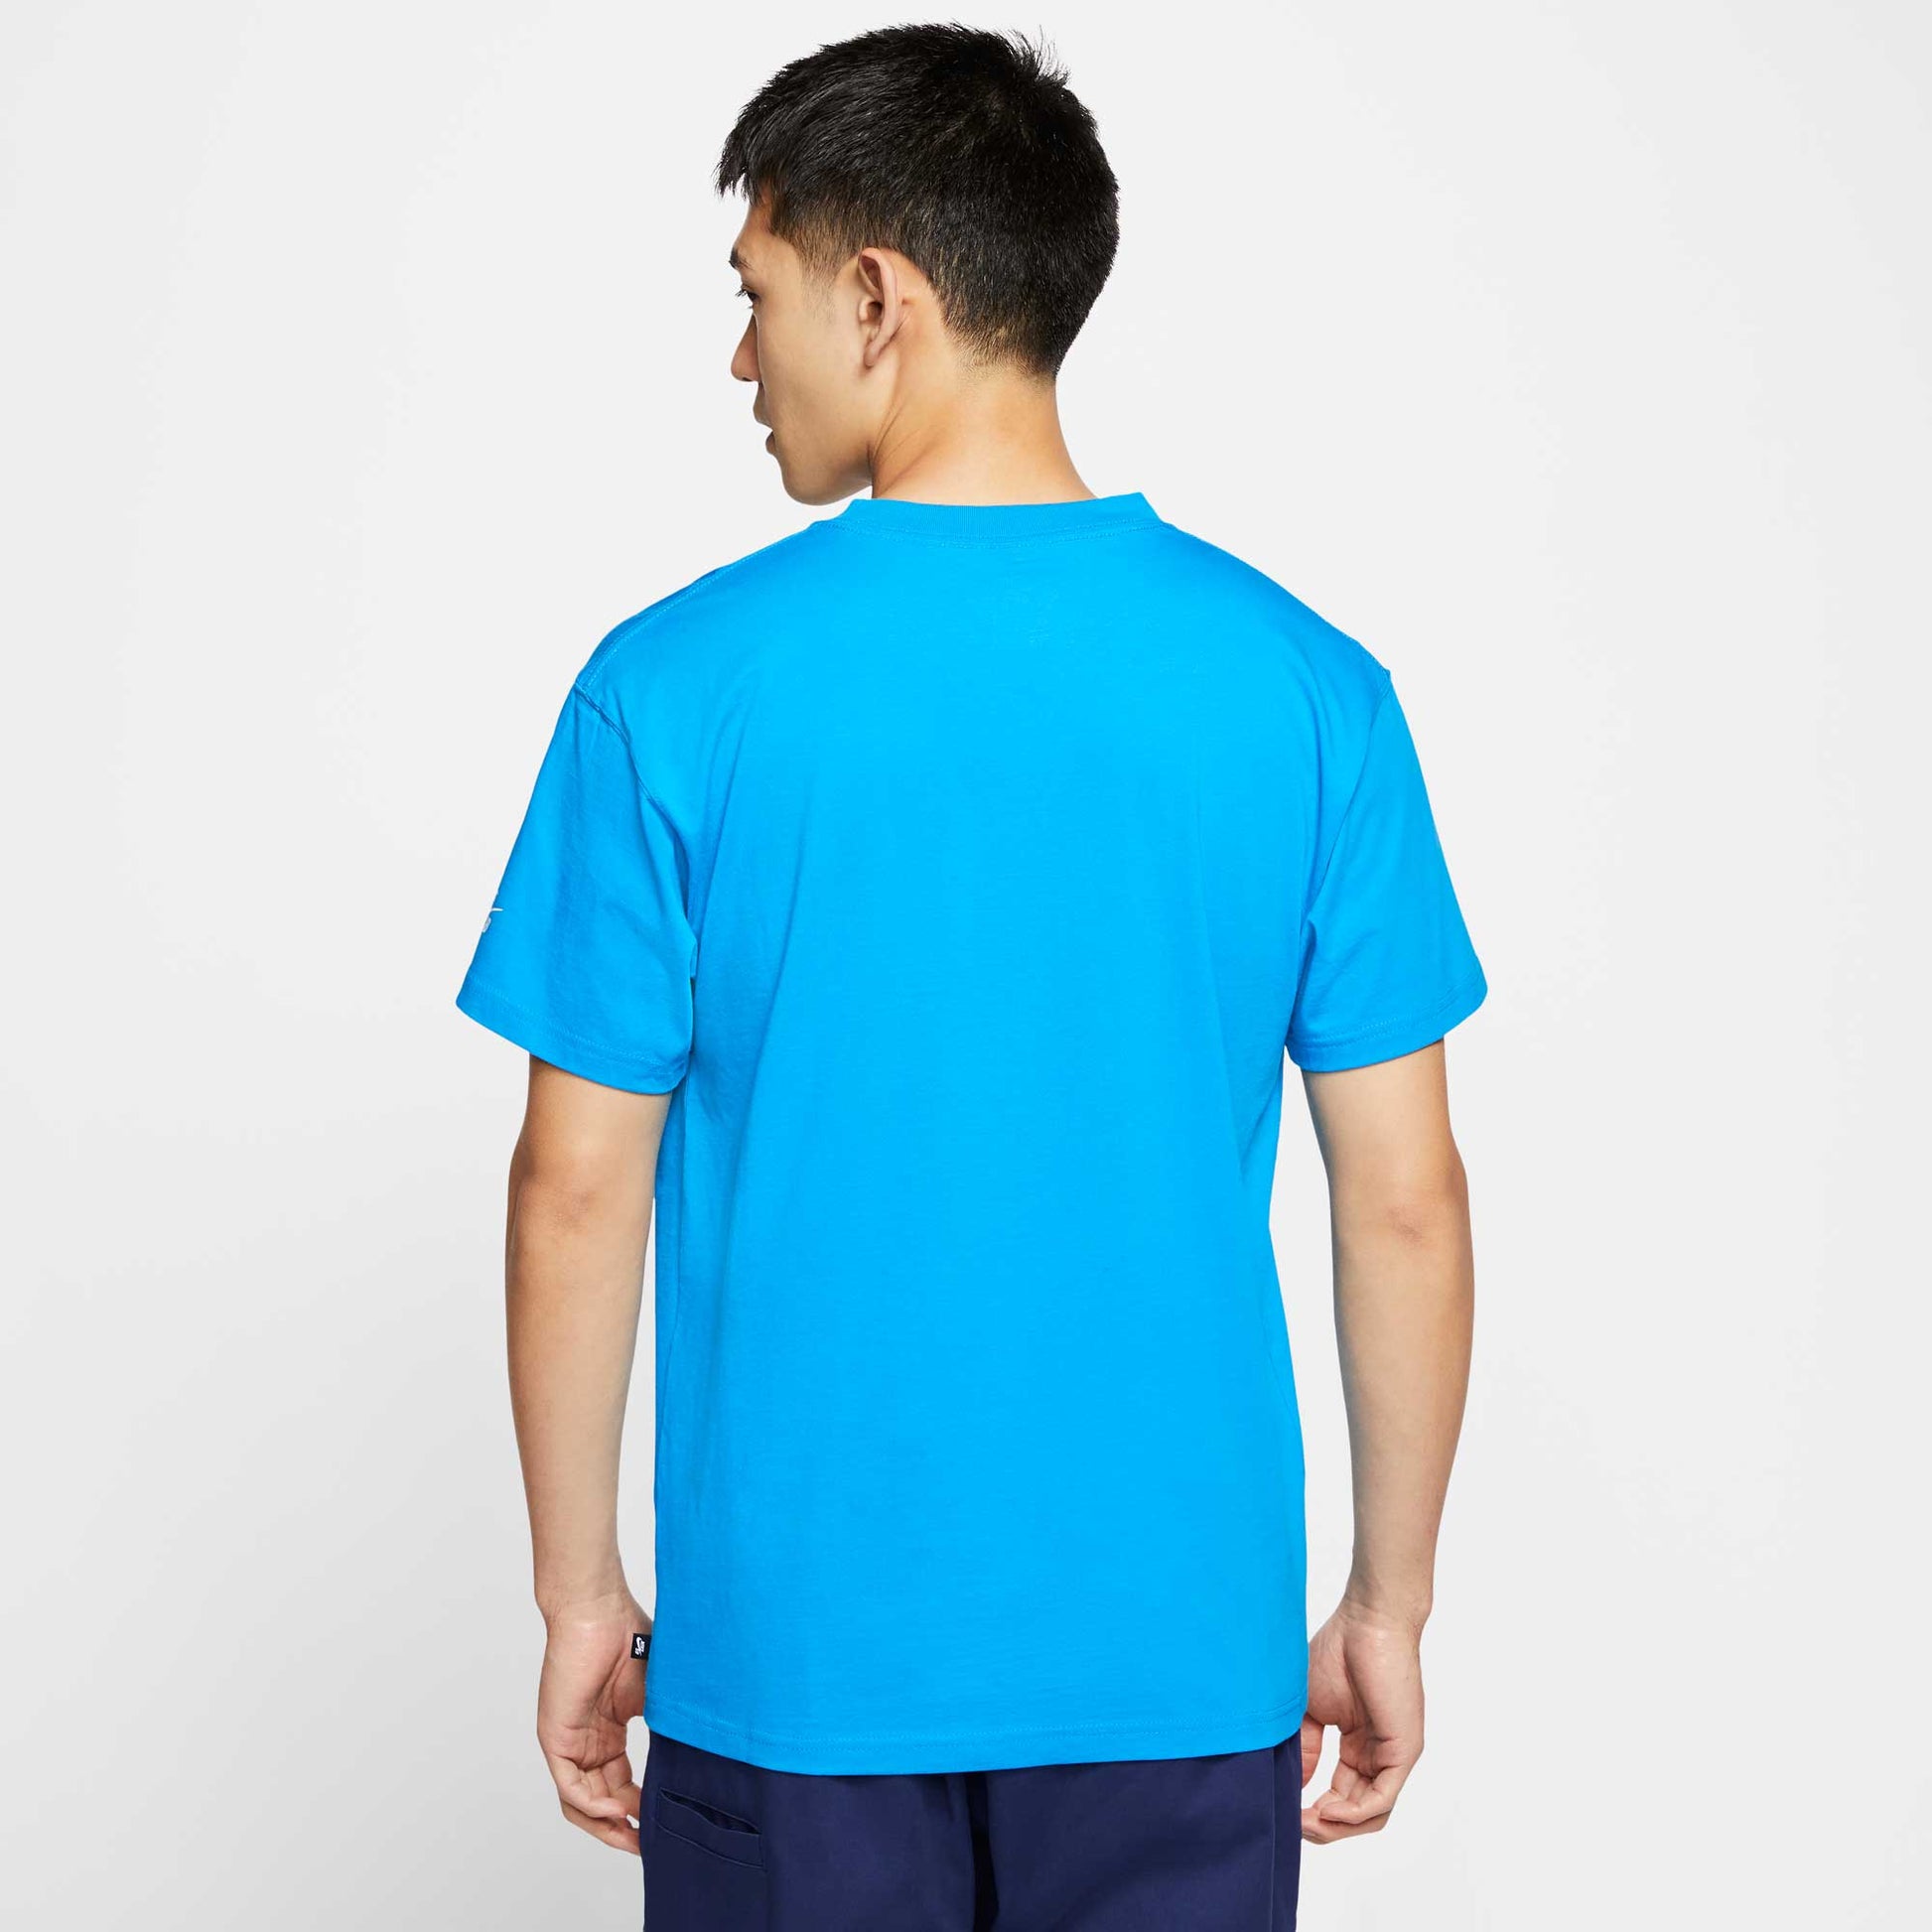 Nike SB x Parra 'France Federation Kit' t-shirt, neptune blue/white - Tiki Room Skateboards - 6